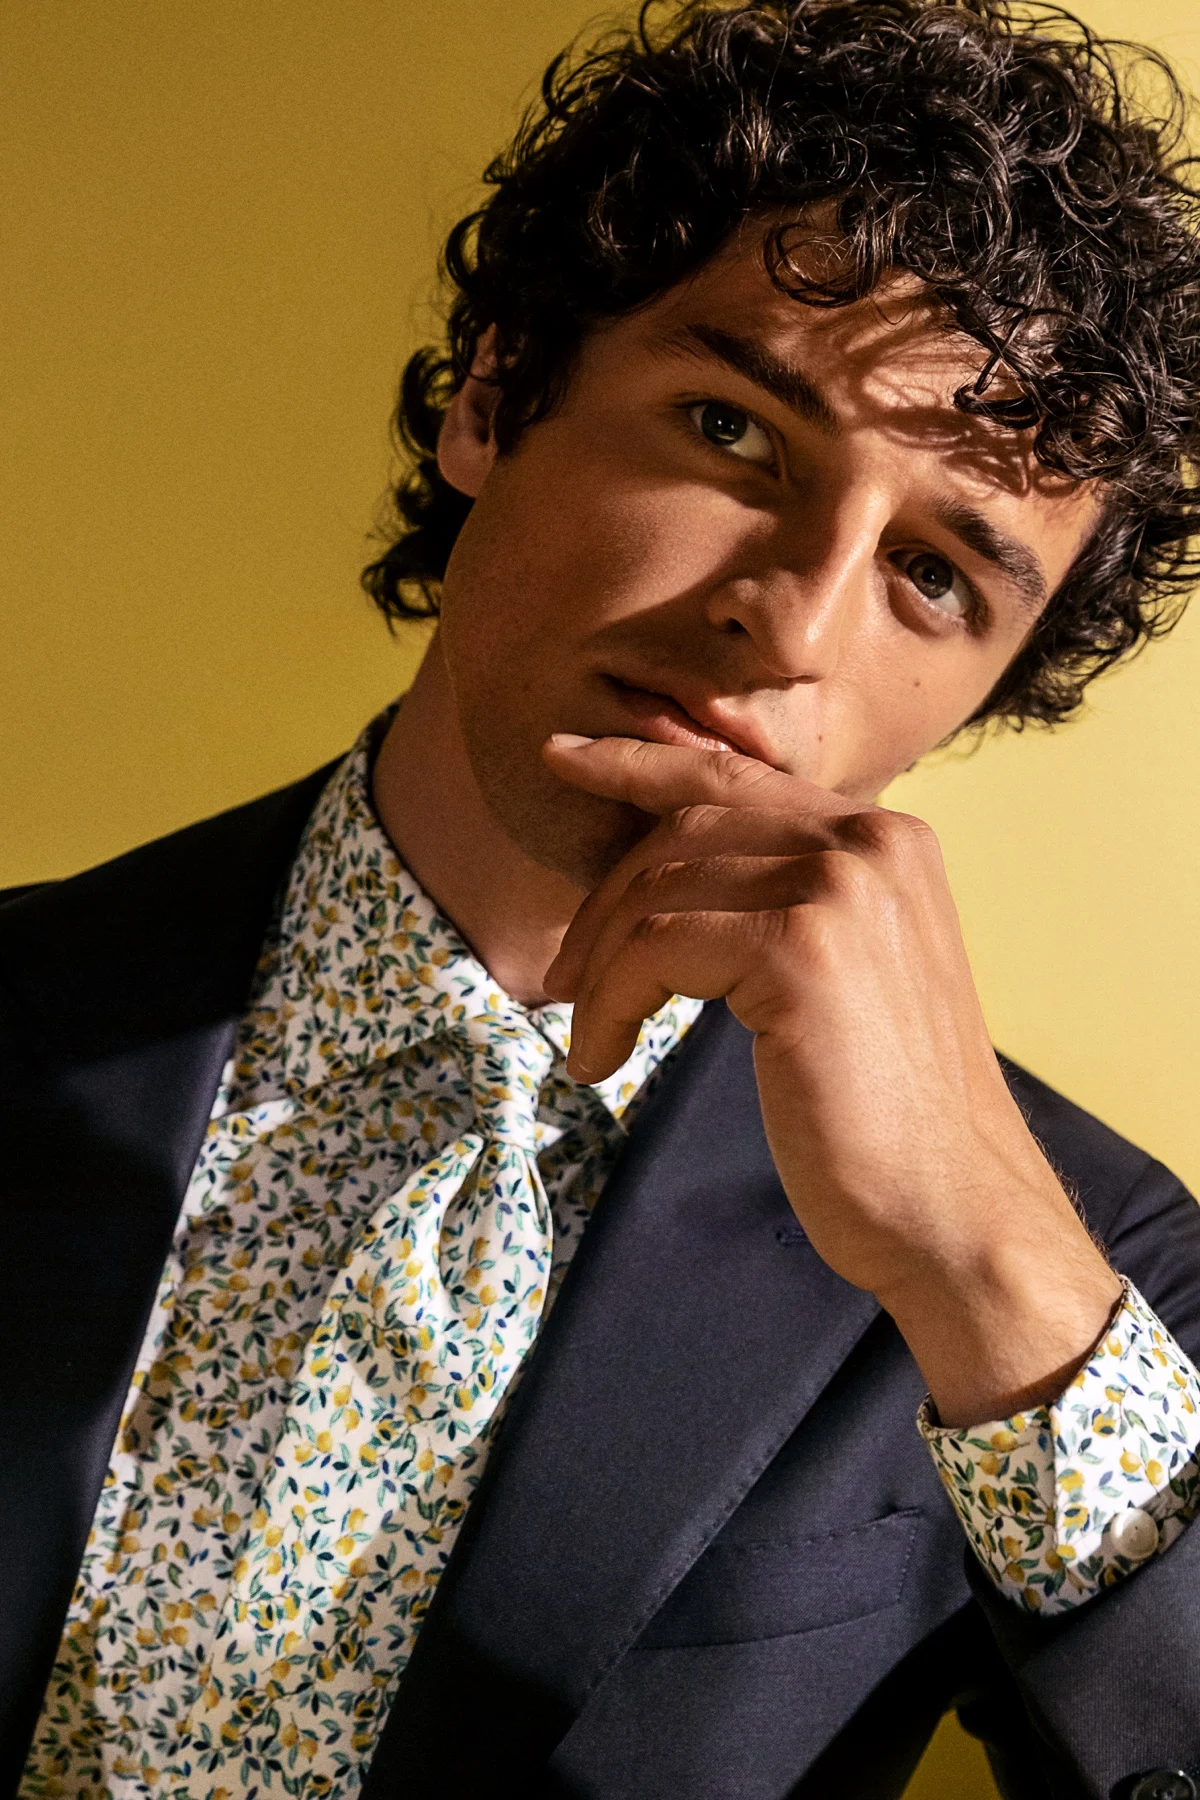 lemon print shirt and tie on model